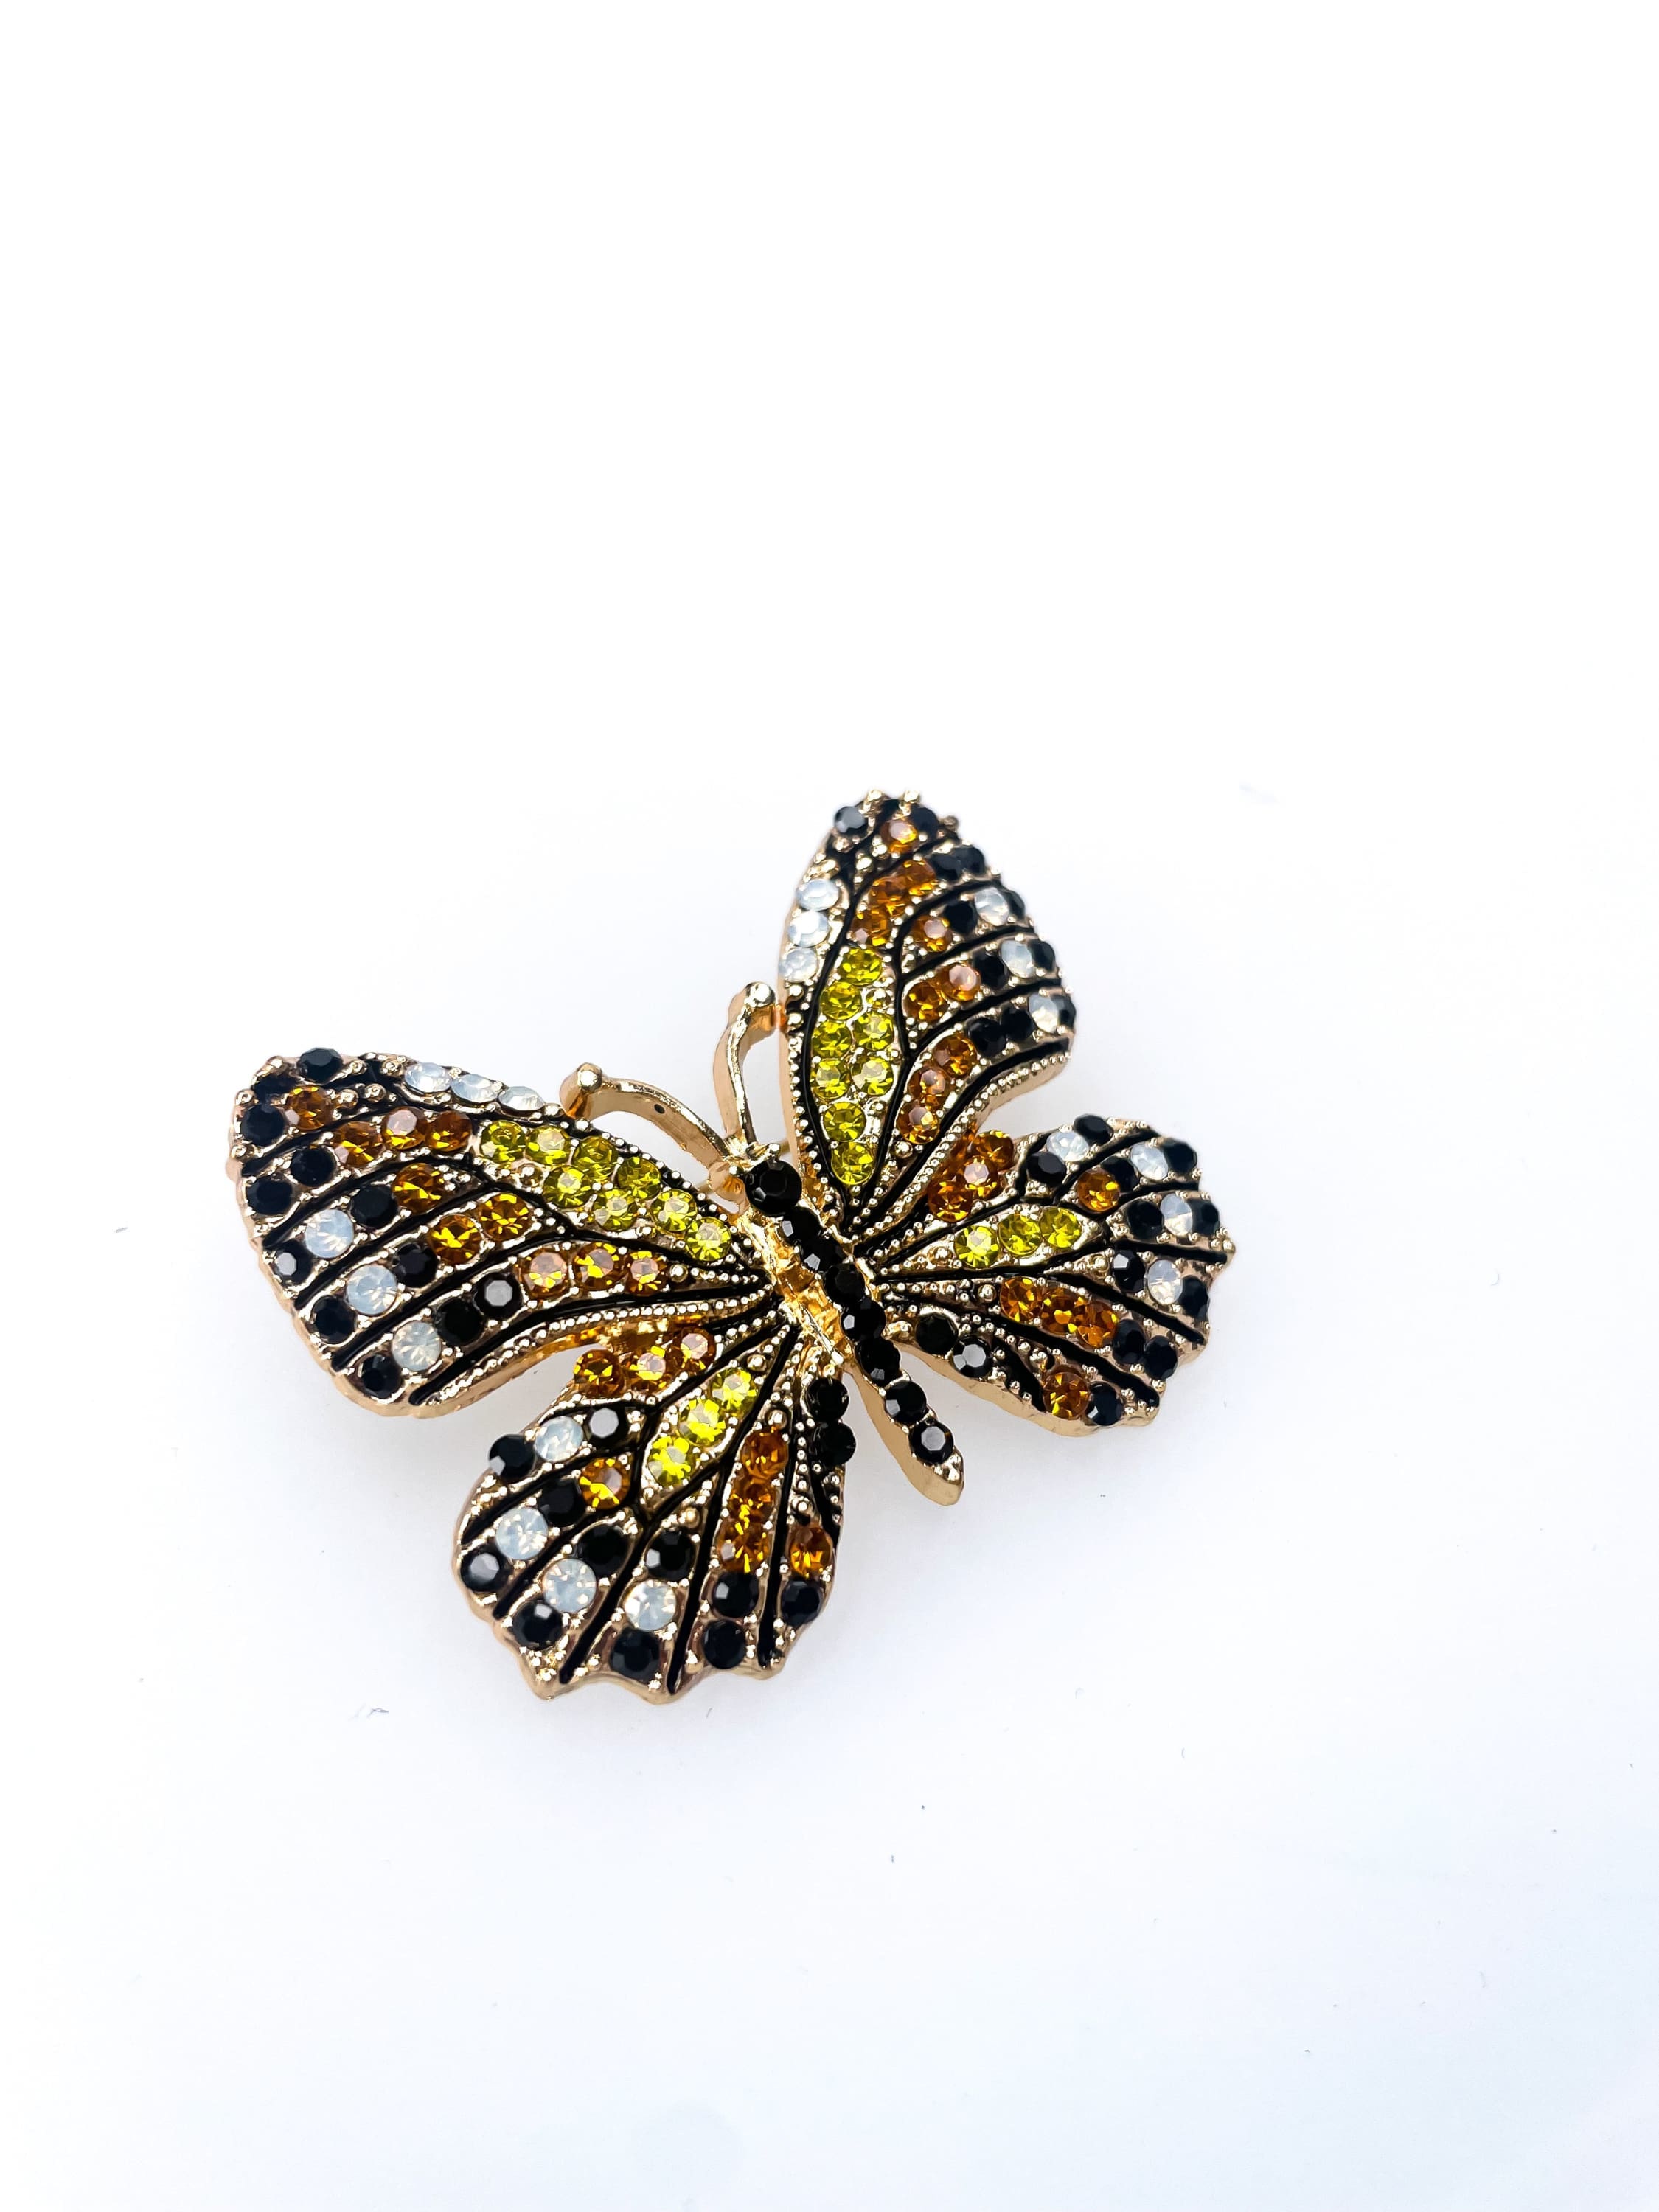 Butterfly brooch Machaon